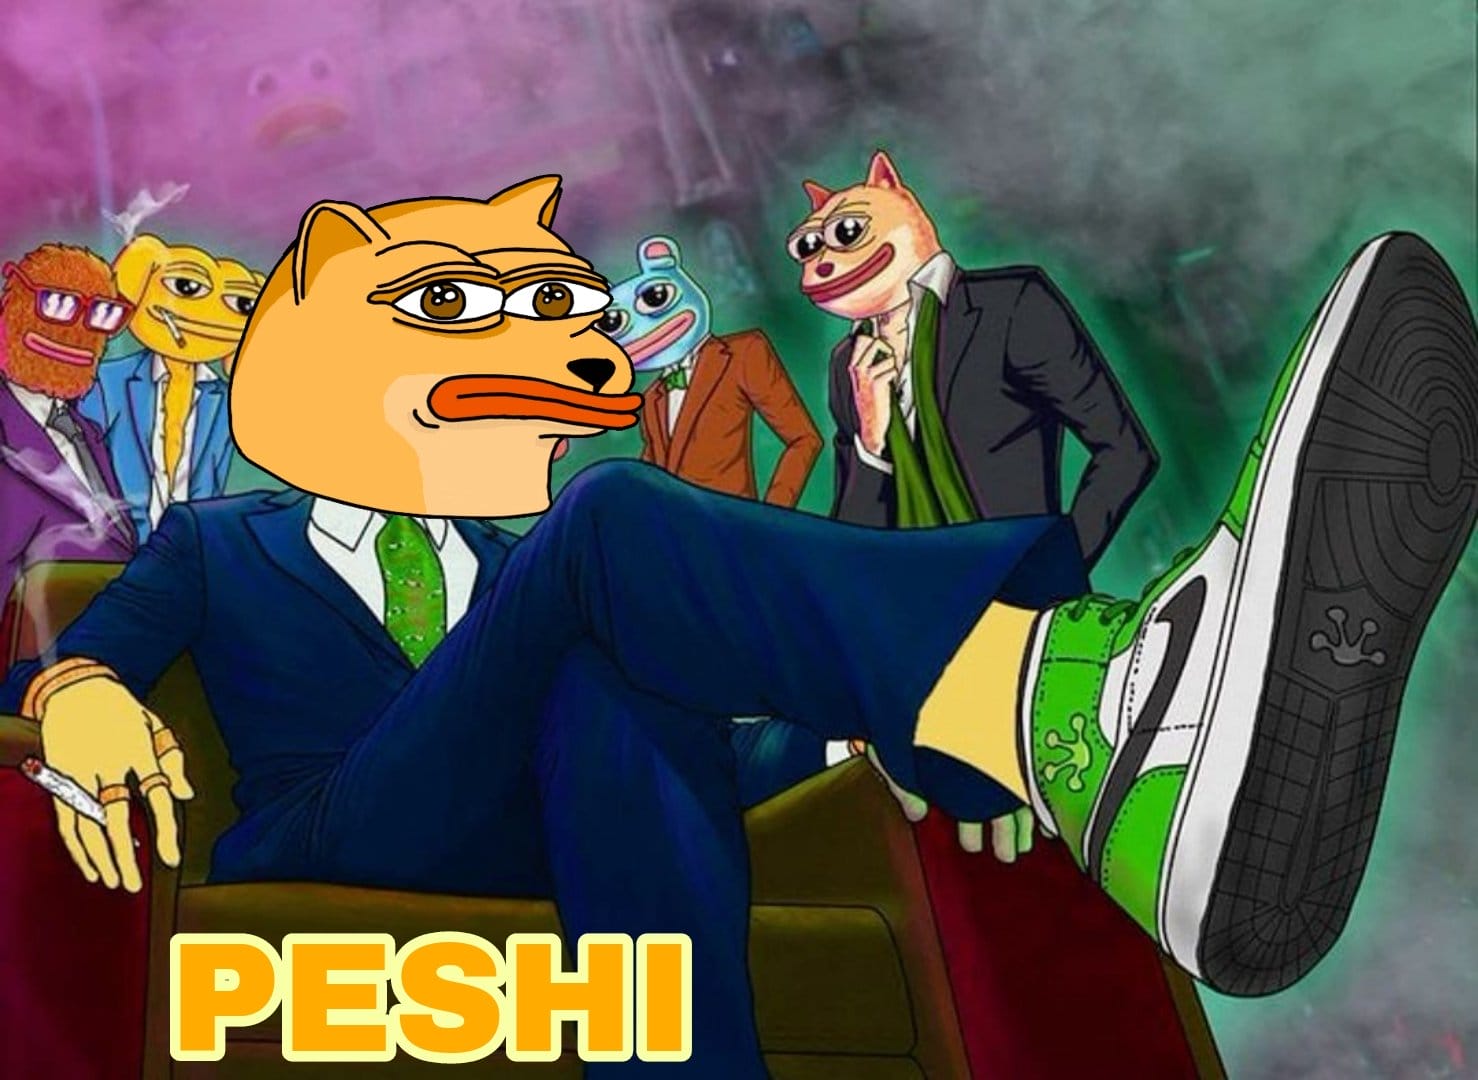 PESHI Cat Crypto Meme Gaat x120 Terwijl Hype Rondom Opkomende Crypto Dogeverse Groeit